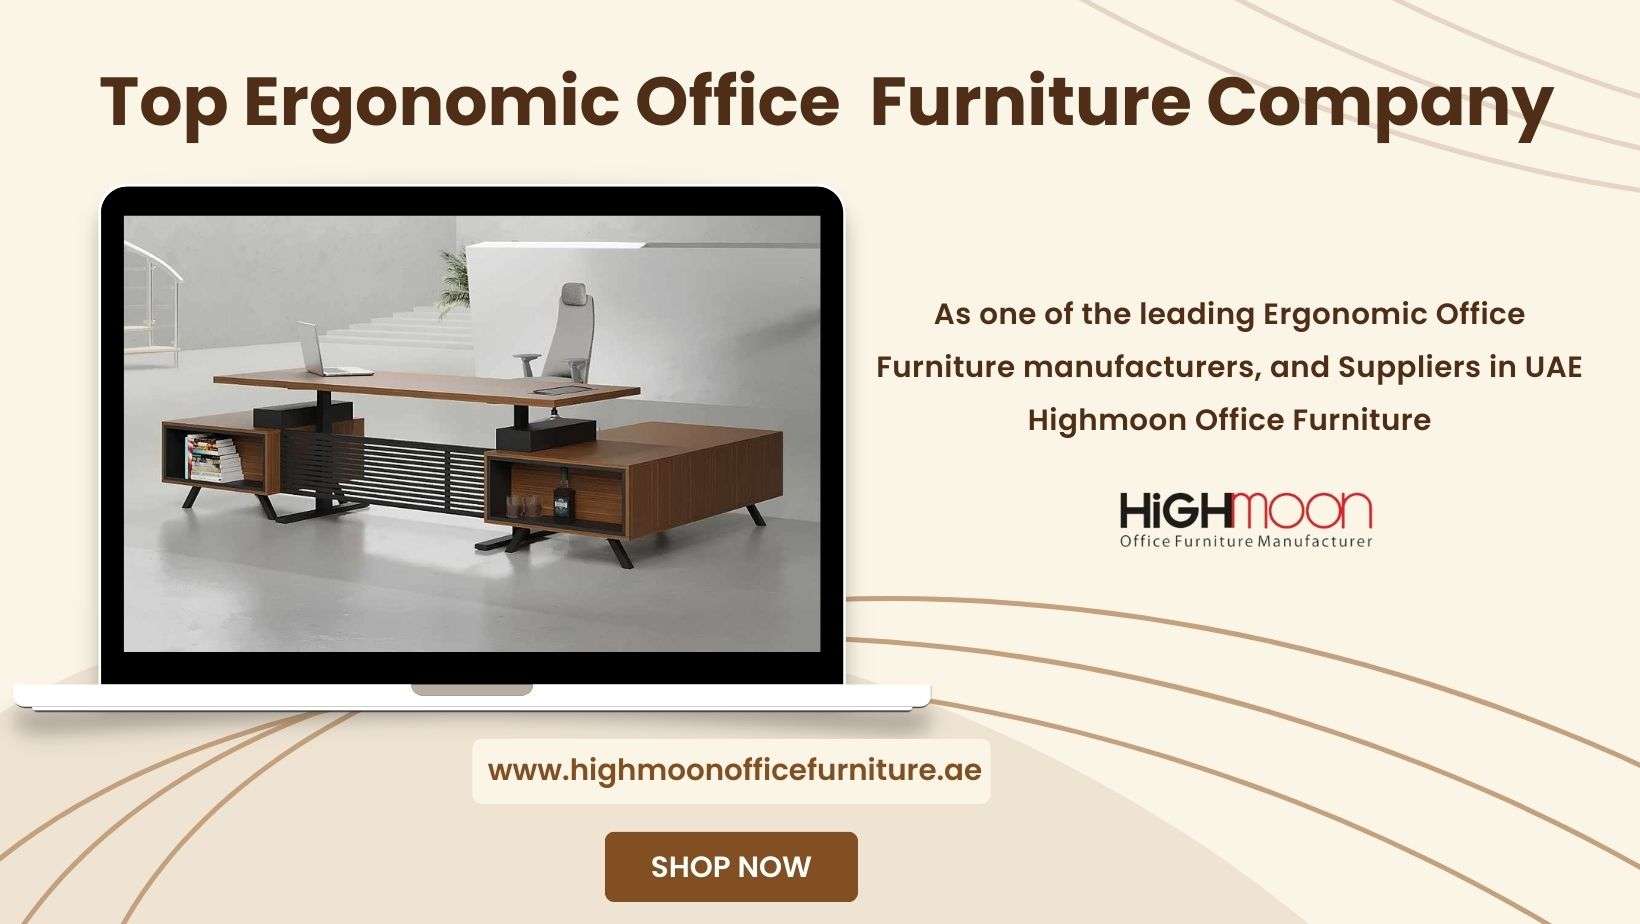 Highmoon Office Furniture Top Ergonomic Furniture Company